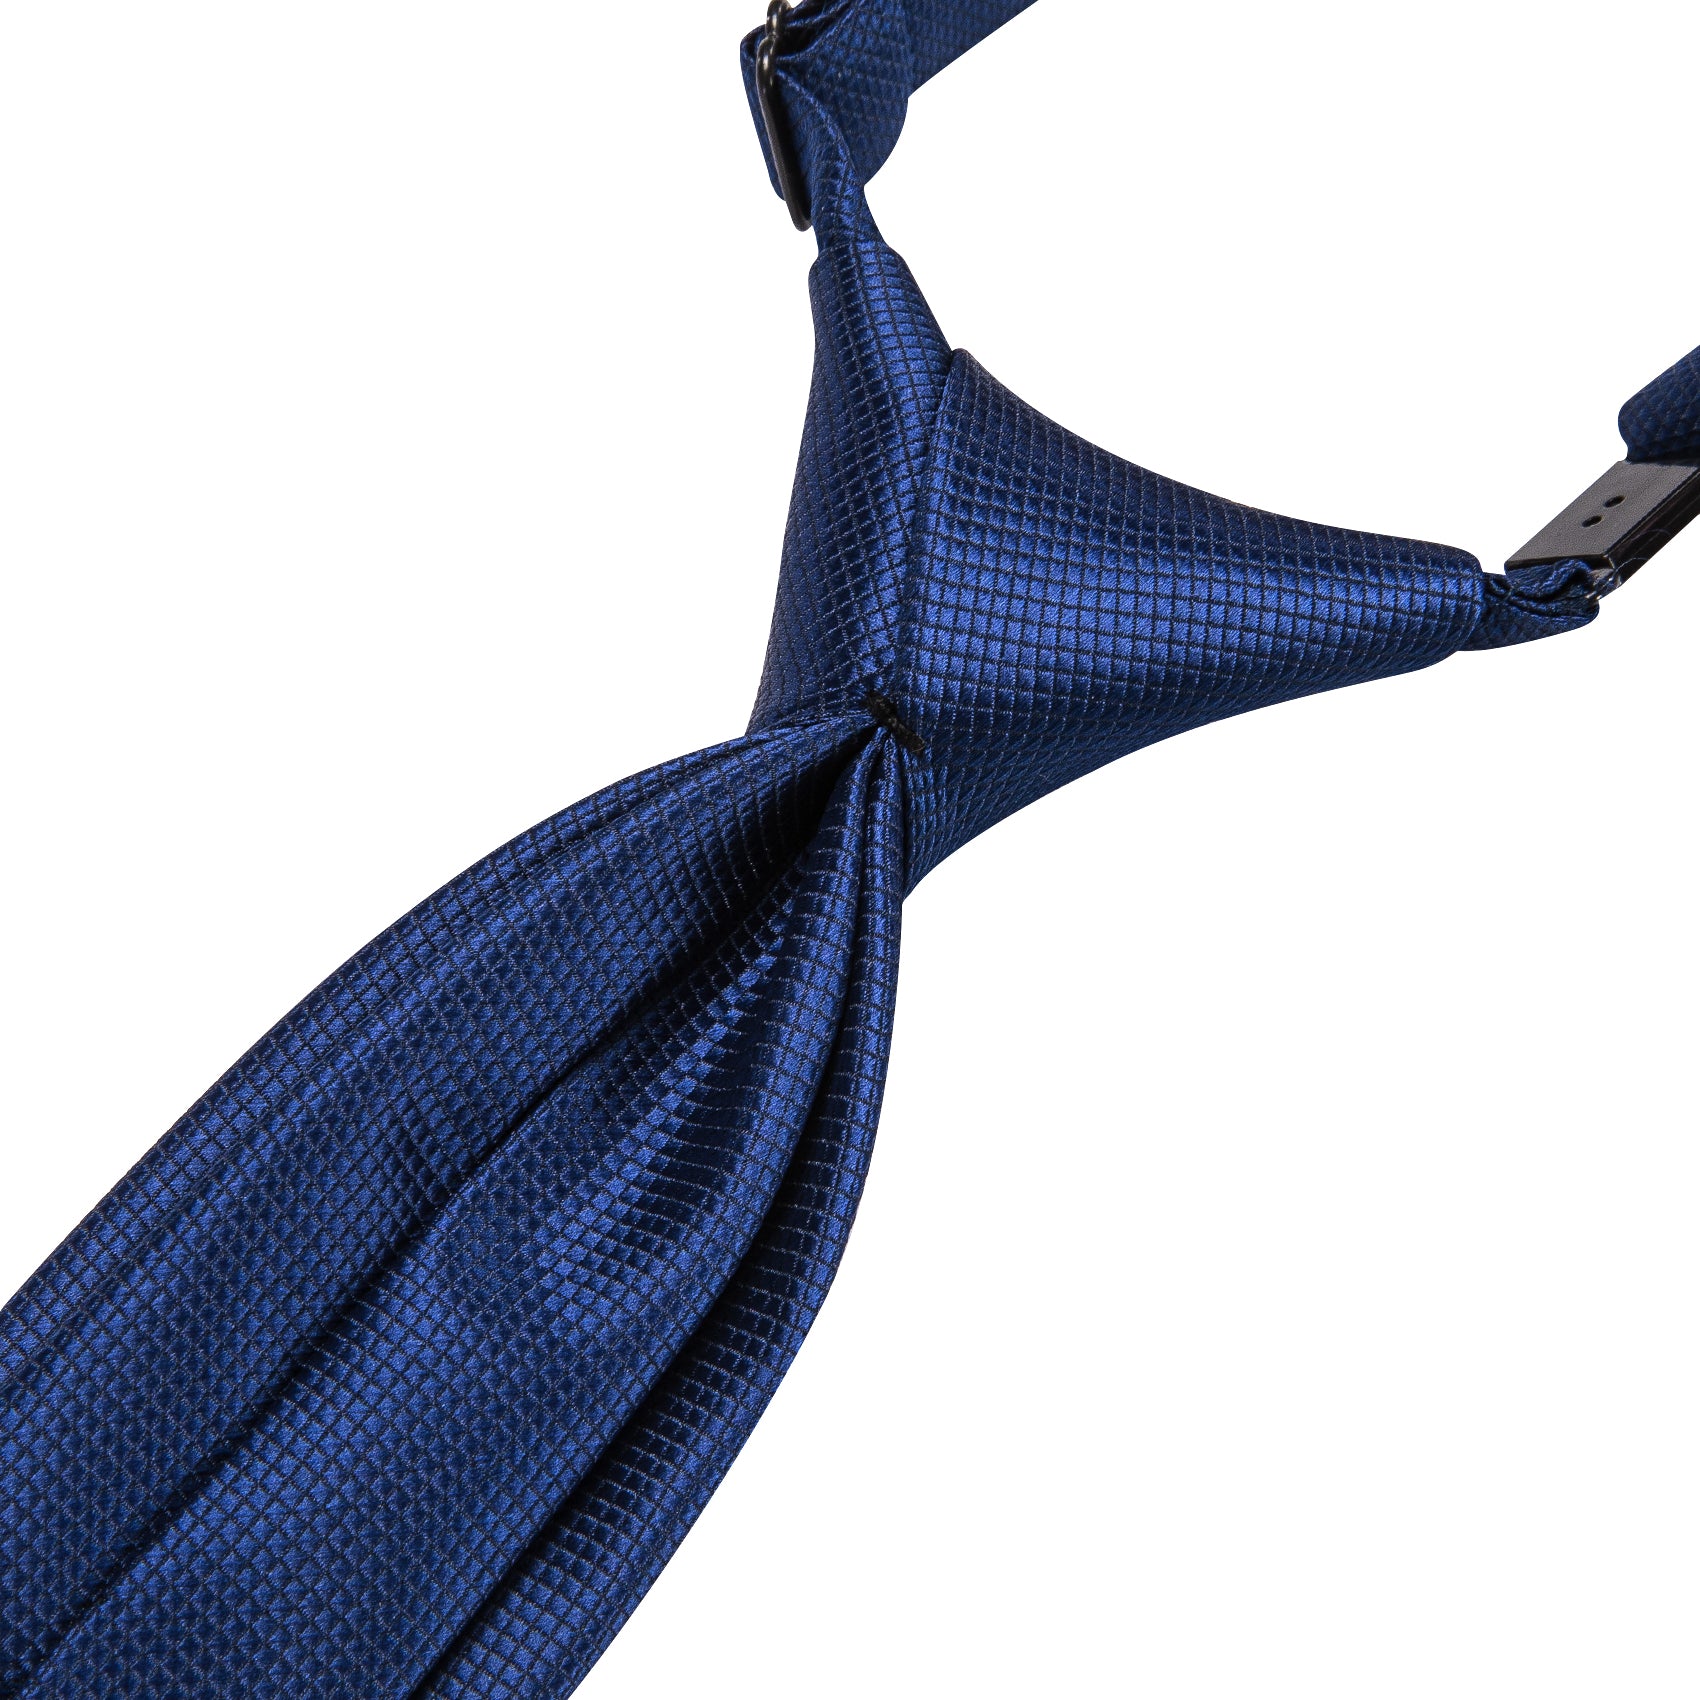 Royal Blue Plaid Boys Pre-tied Adjustable Tie Pocket Square